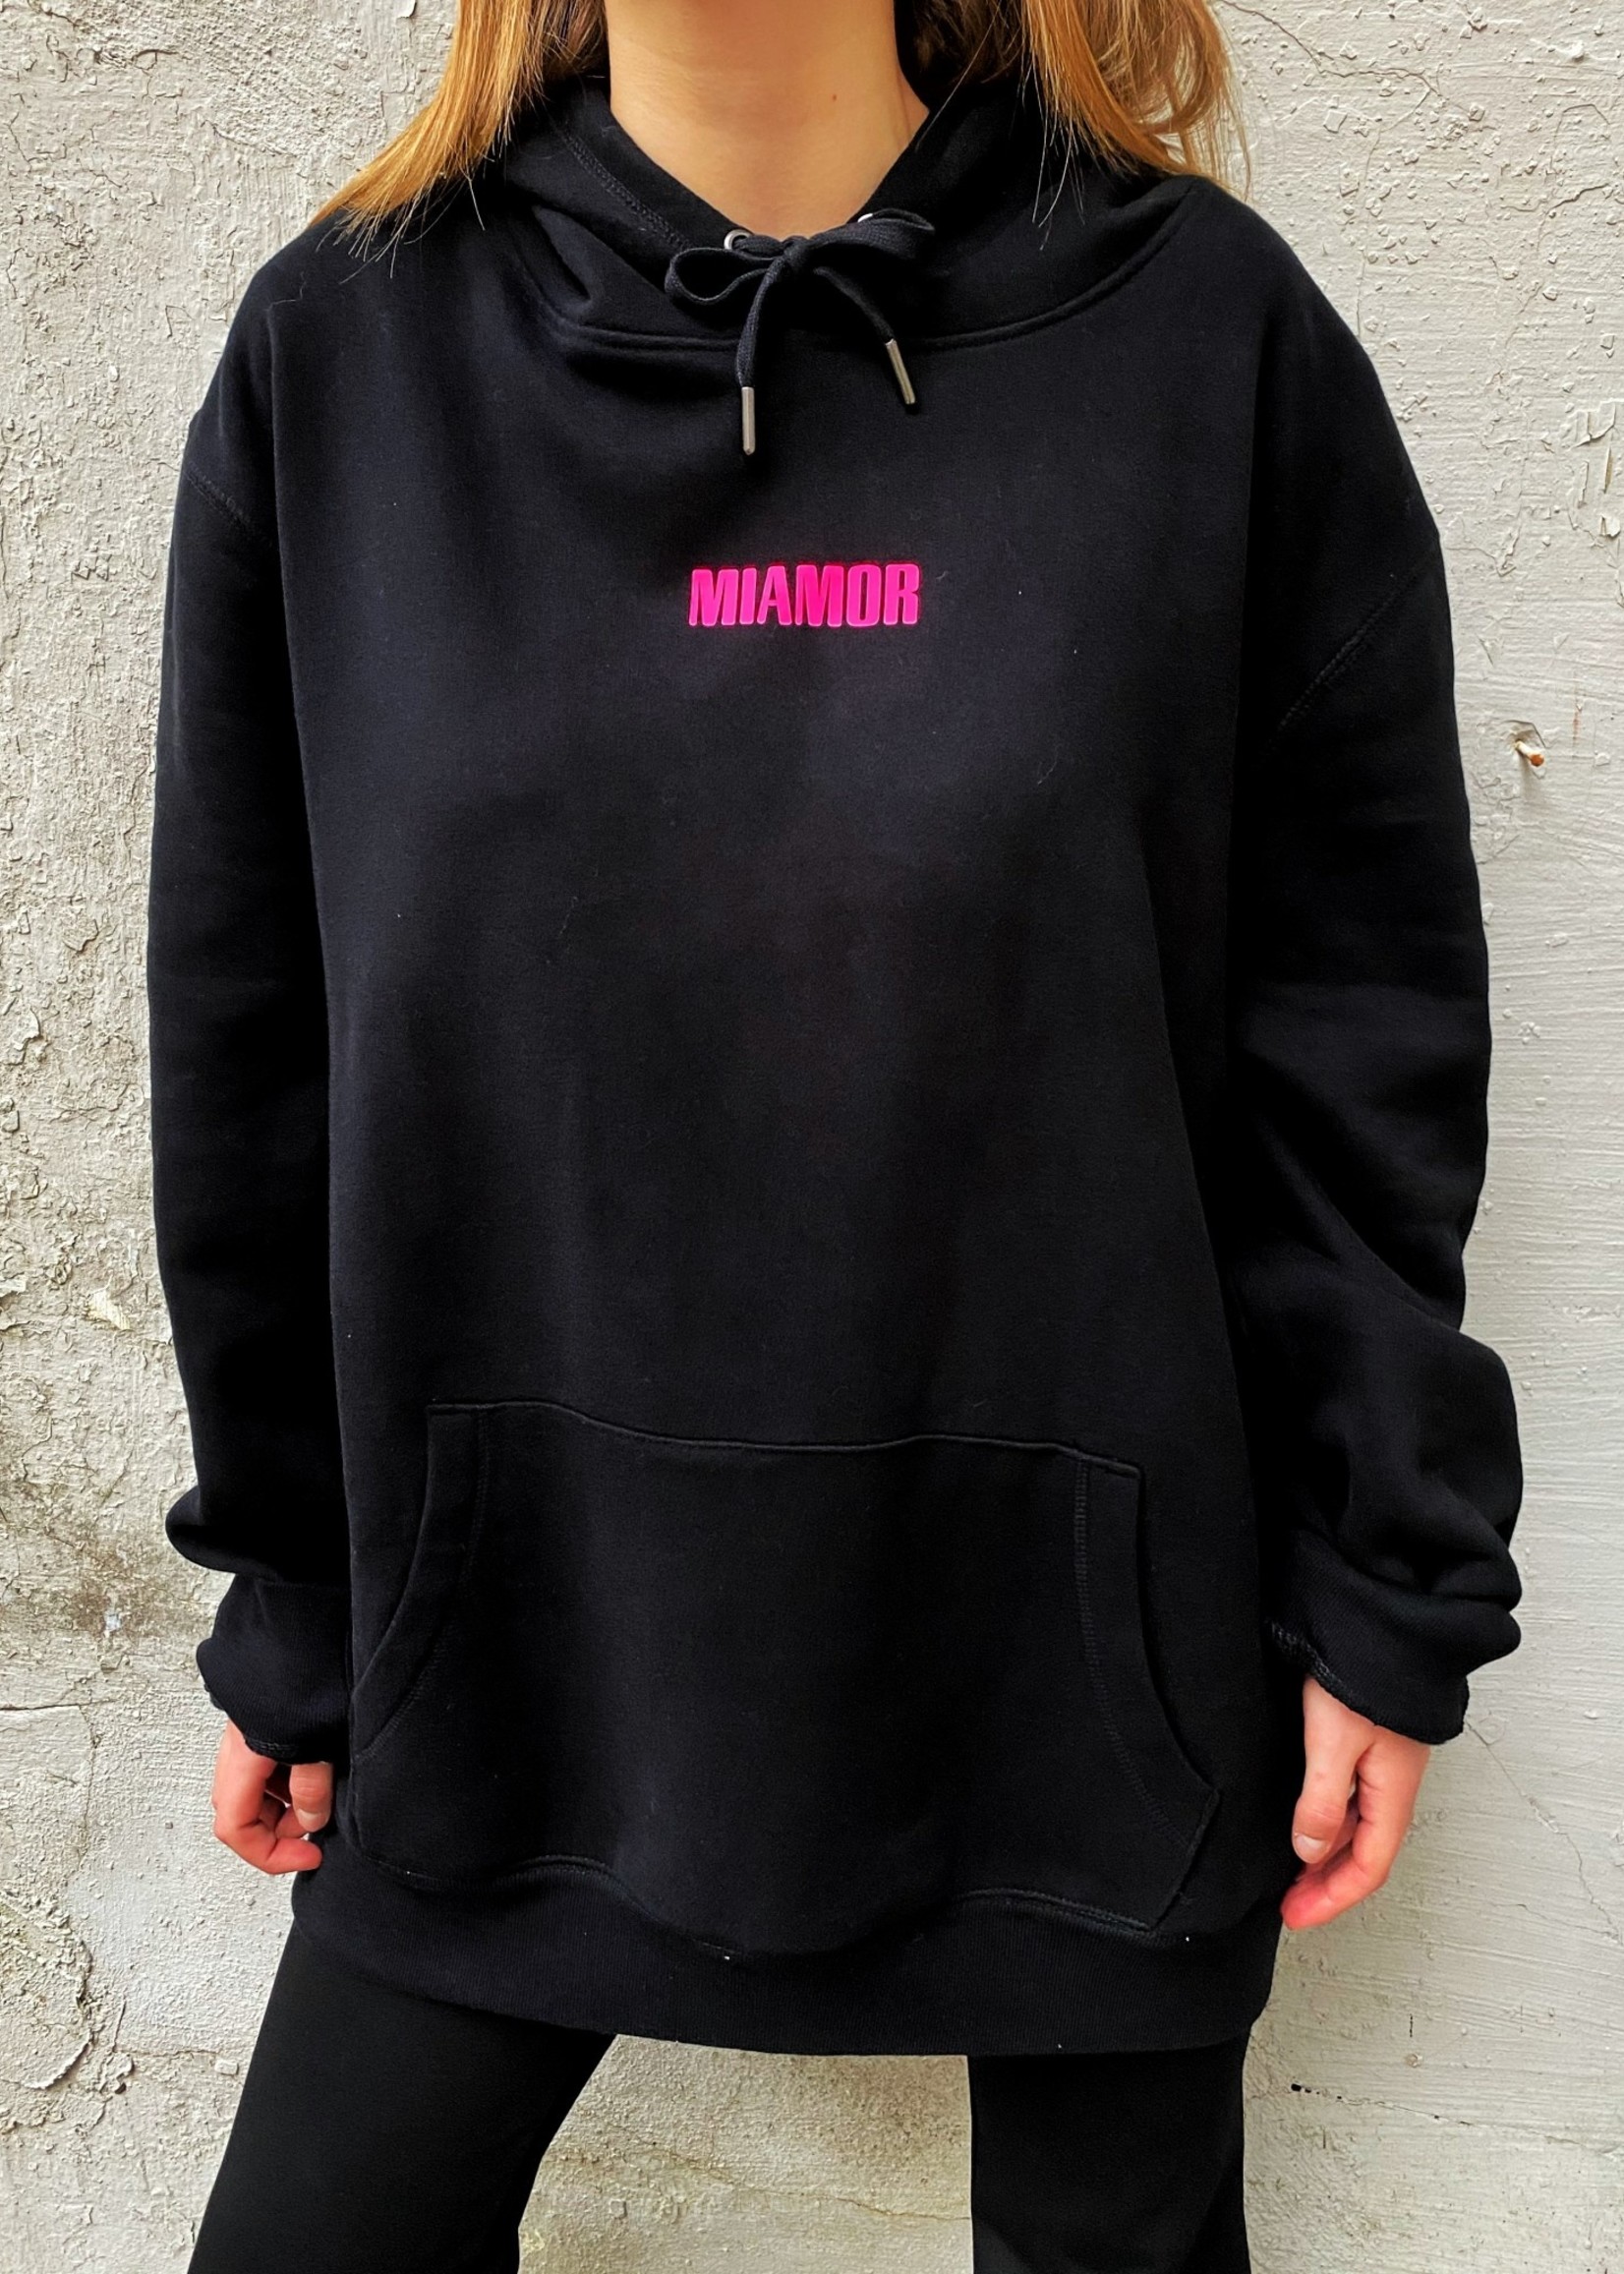 MIAMOR Unisex Hoodie - Black - Big Logo Neon Pink